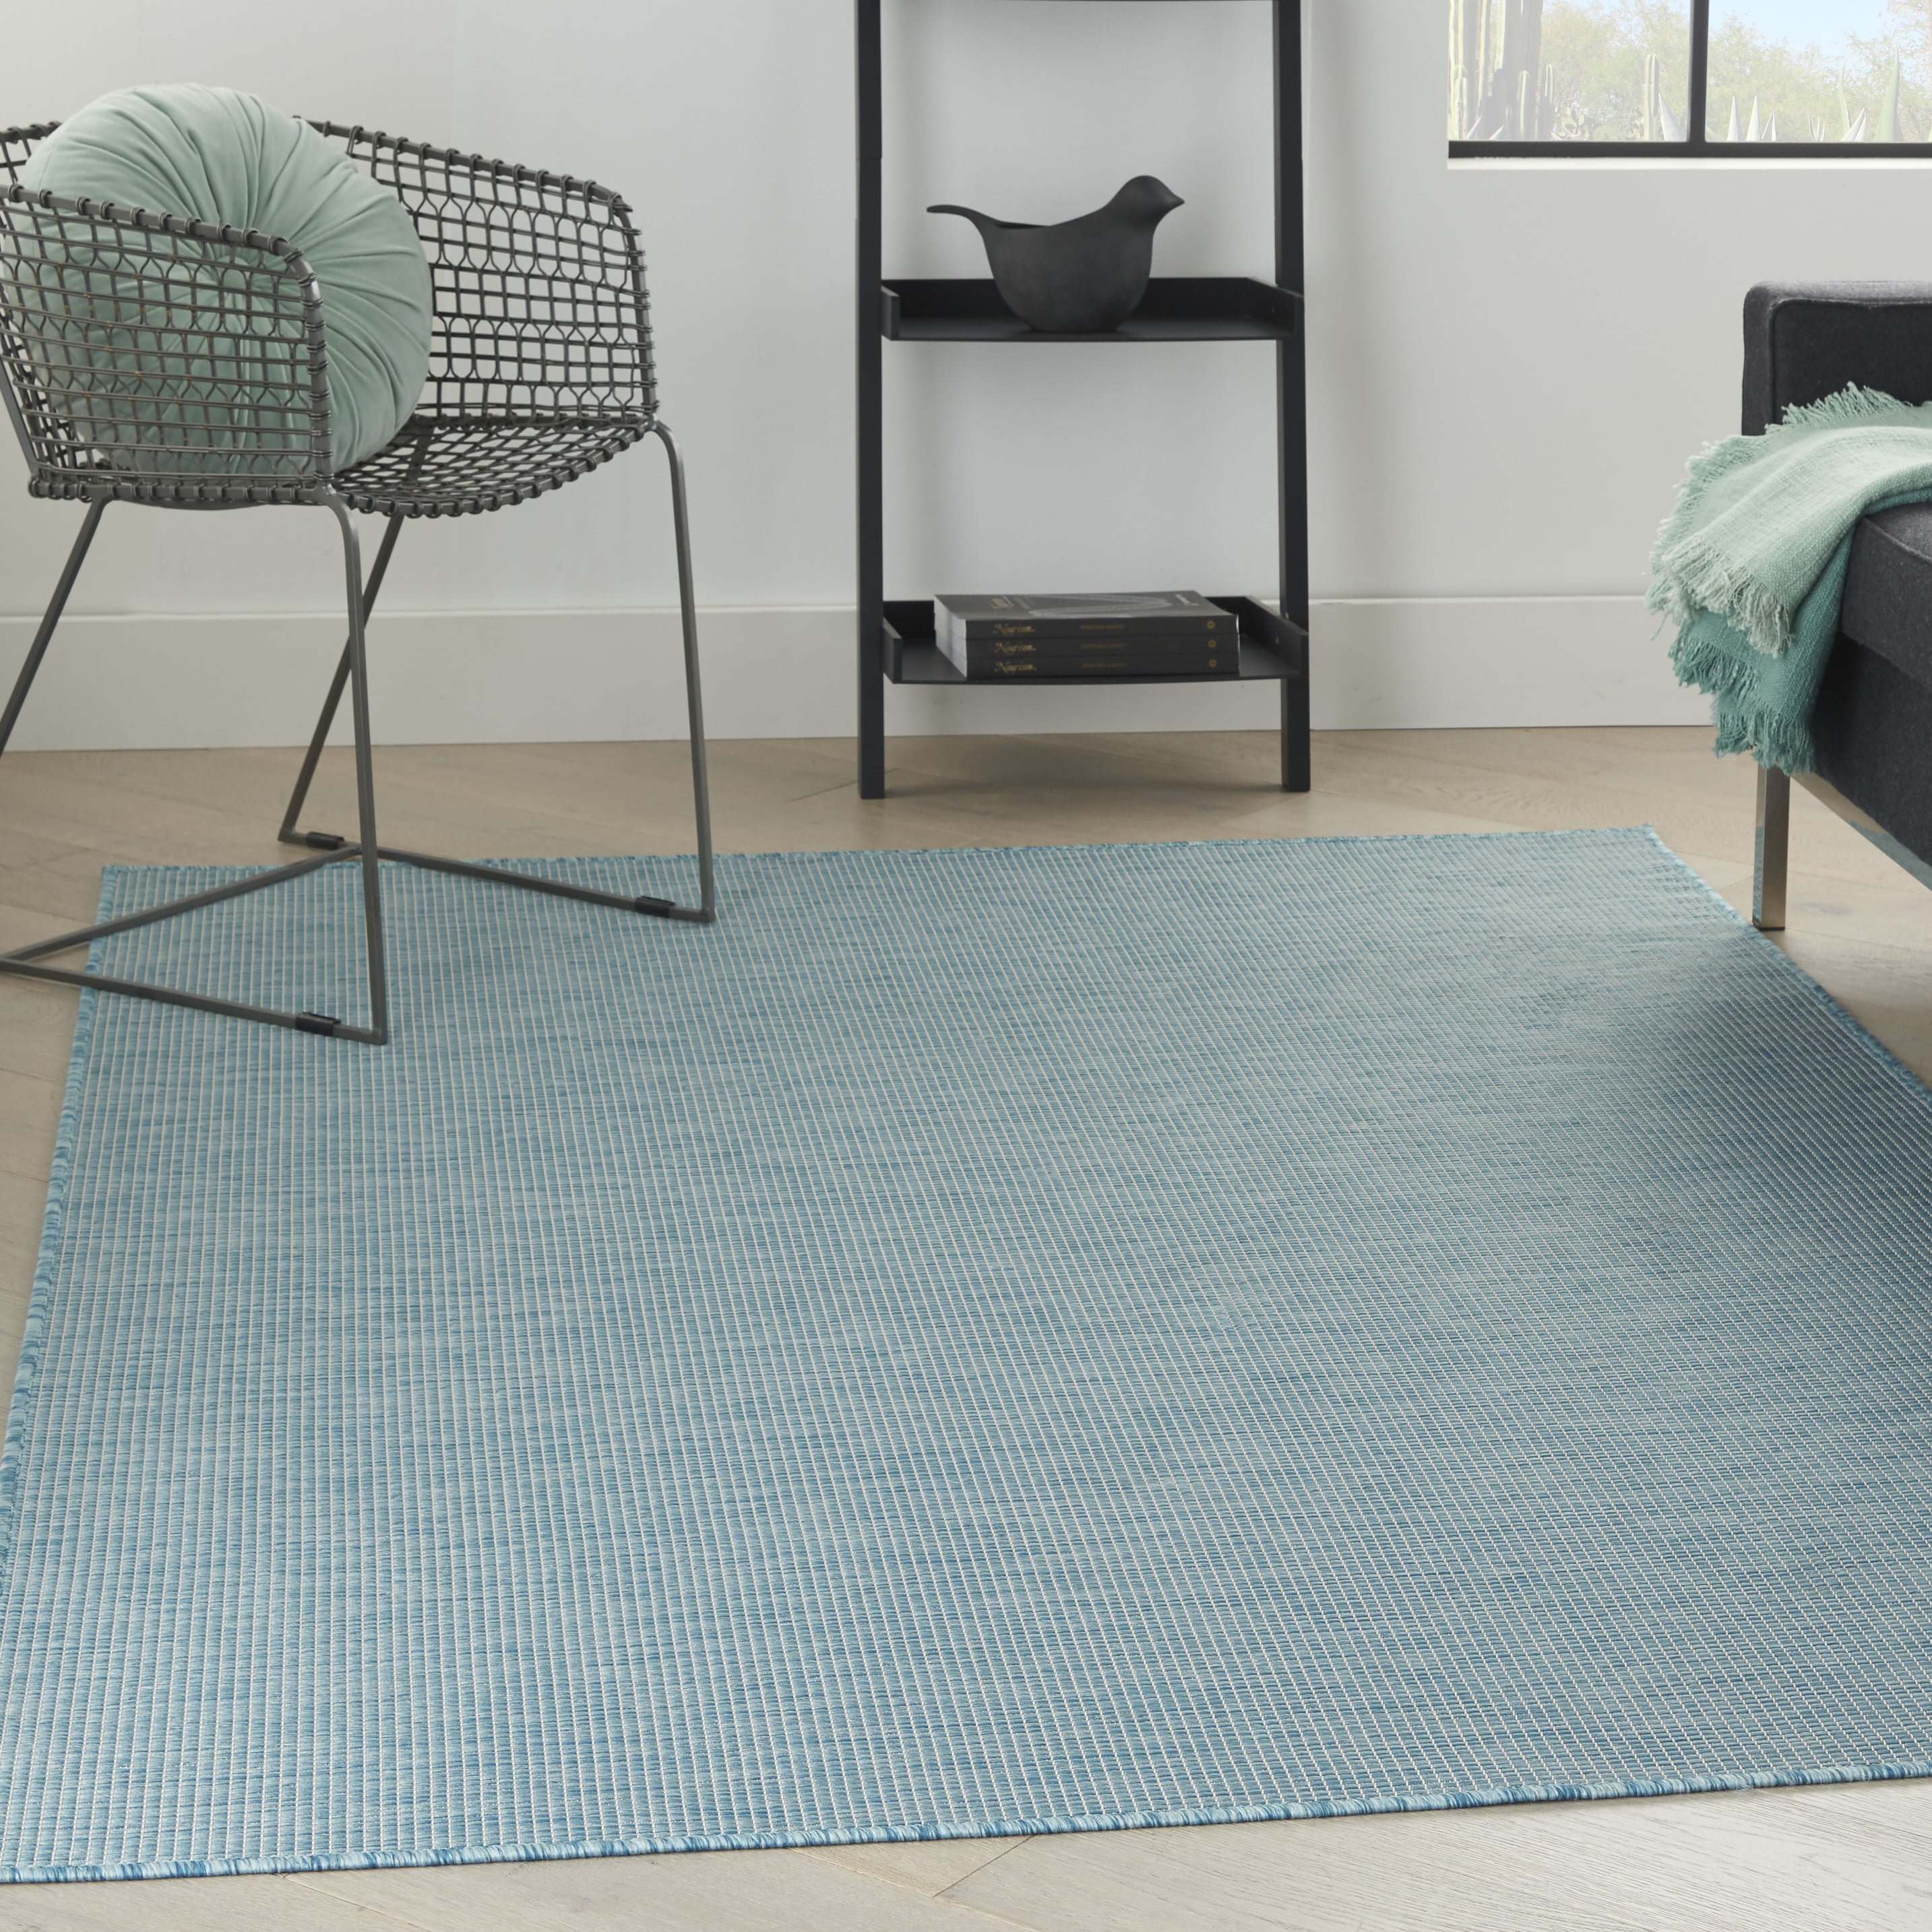 Green Bamboo Leaf Spa Floor Non-slip Beach Mat Room Yoga Carpet Round Area Rug 